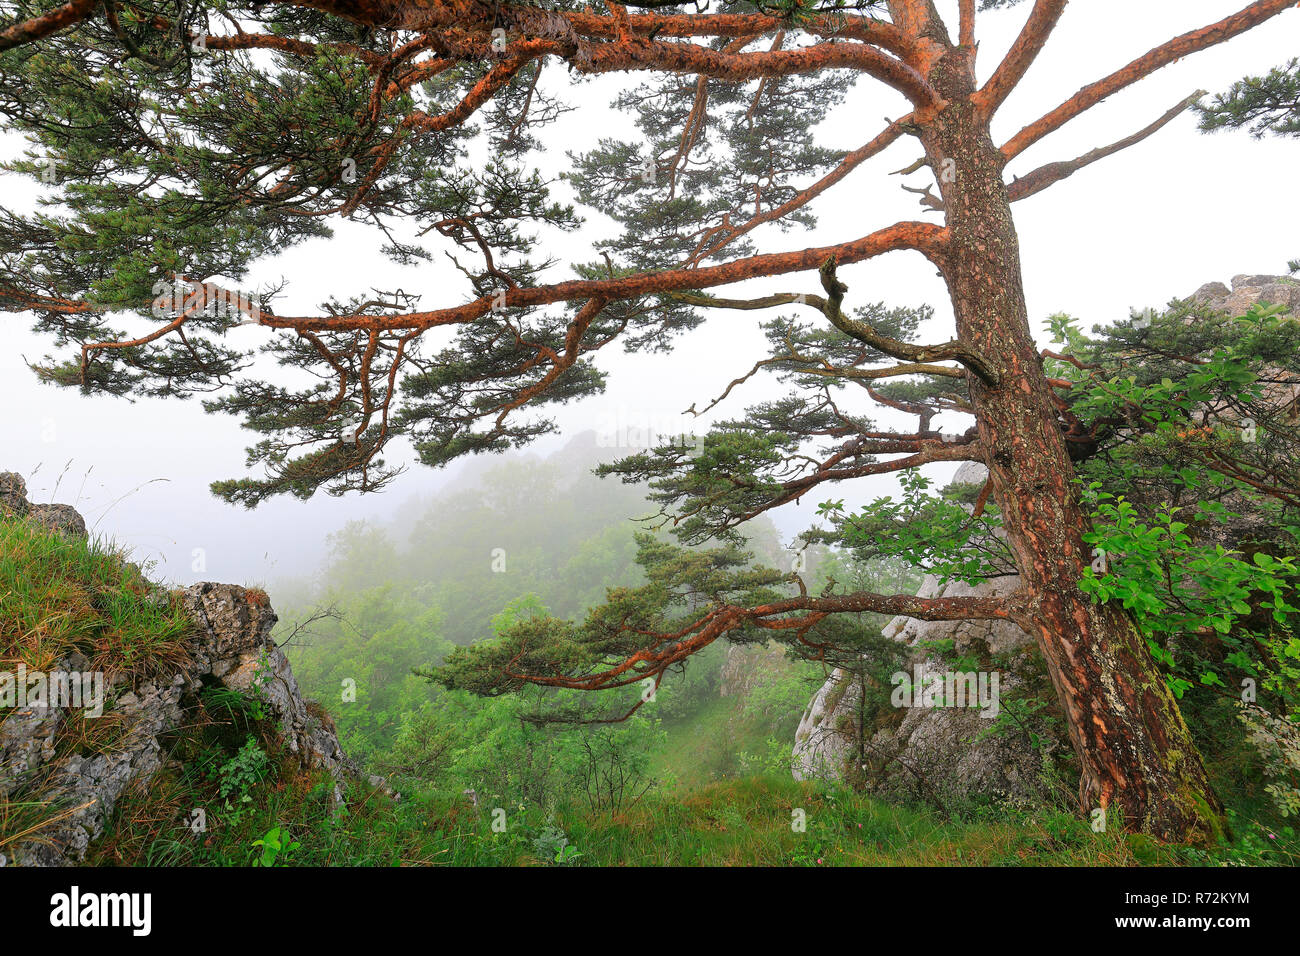 pine trees, Stiegelesfelsen, Germany (Pinaceae, Pinus) Stock Photo